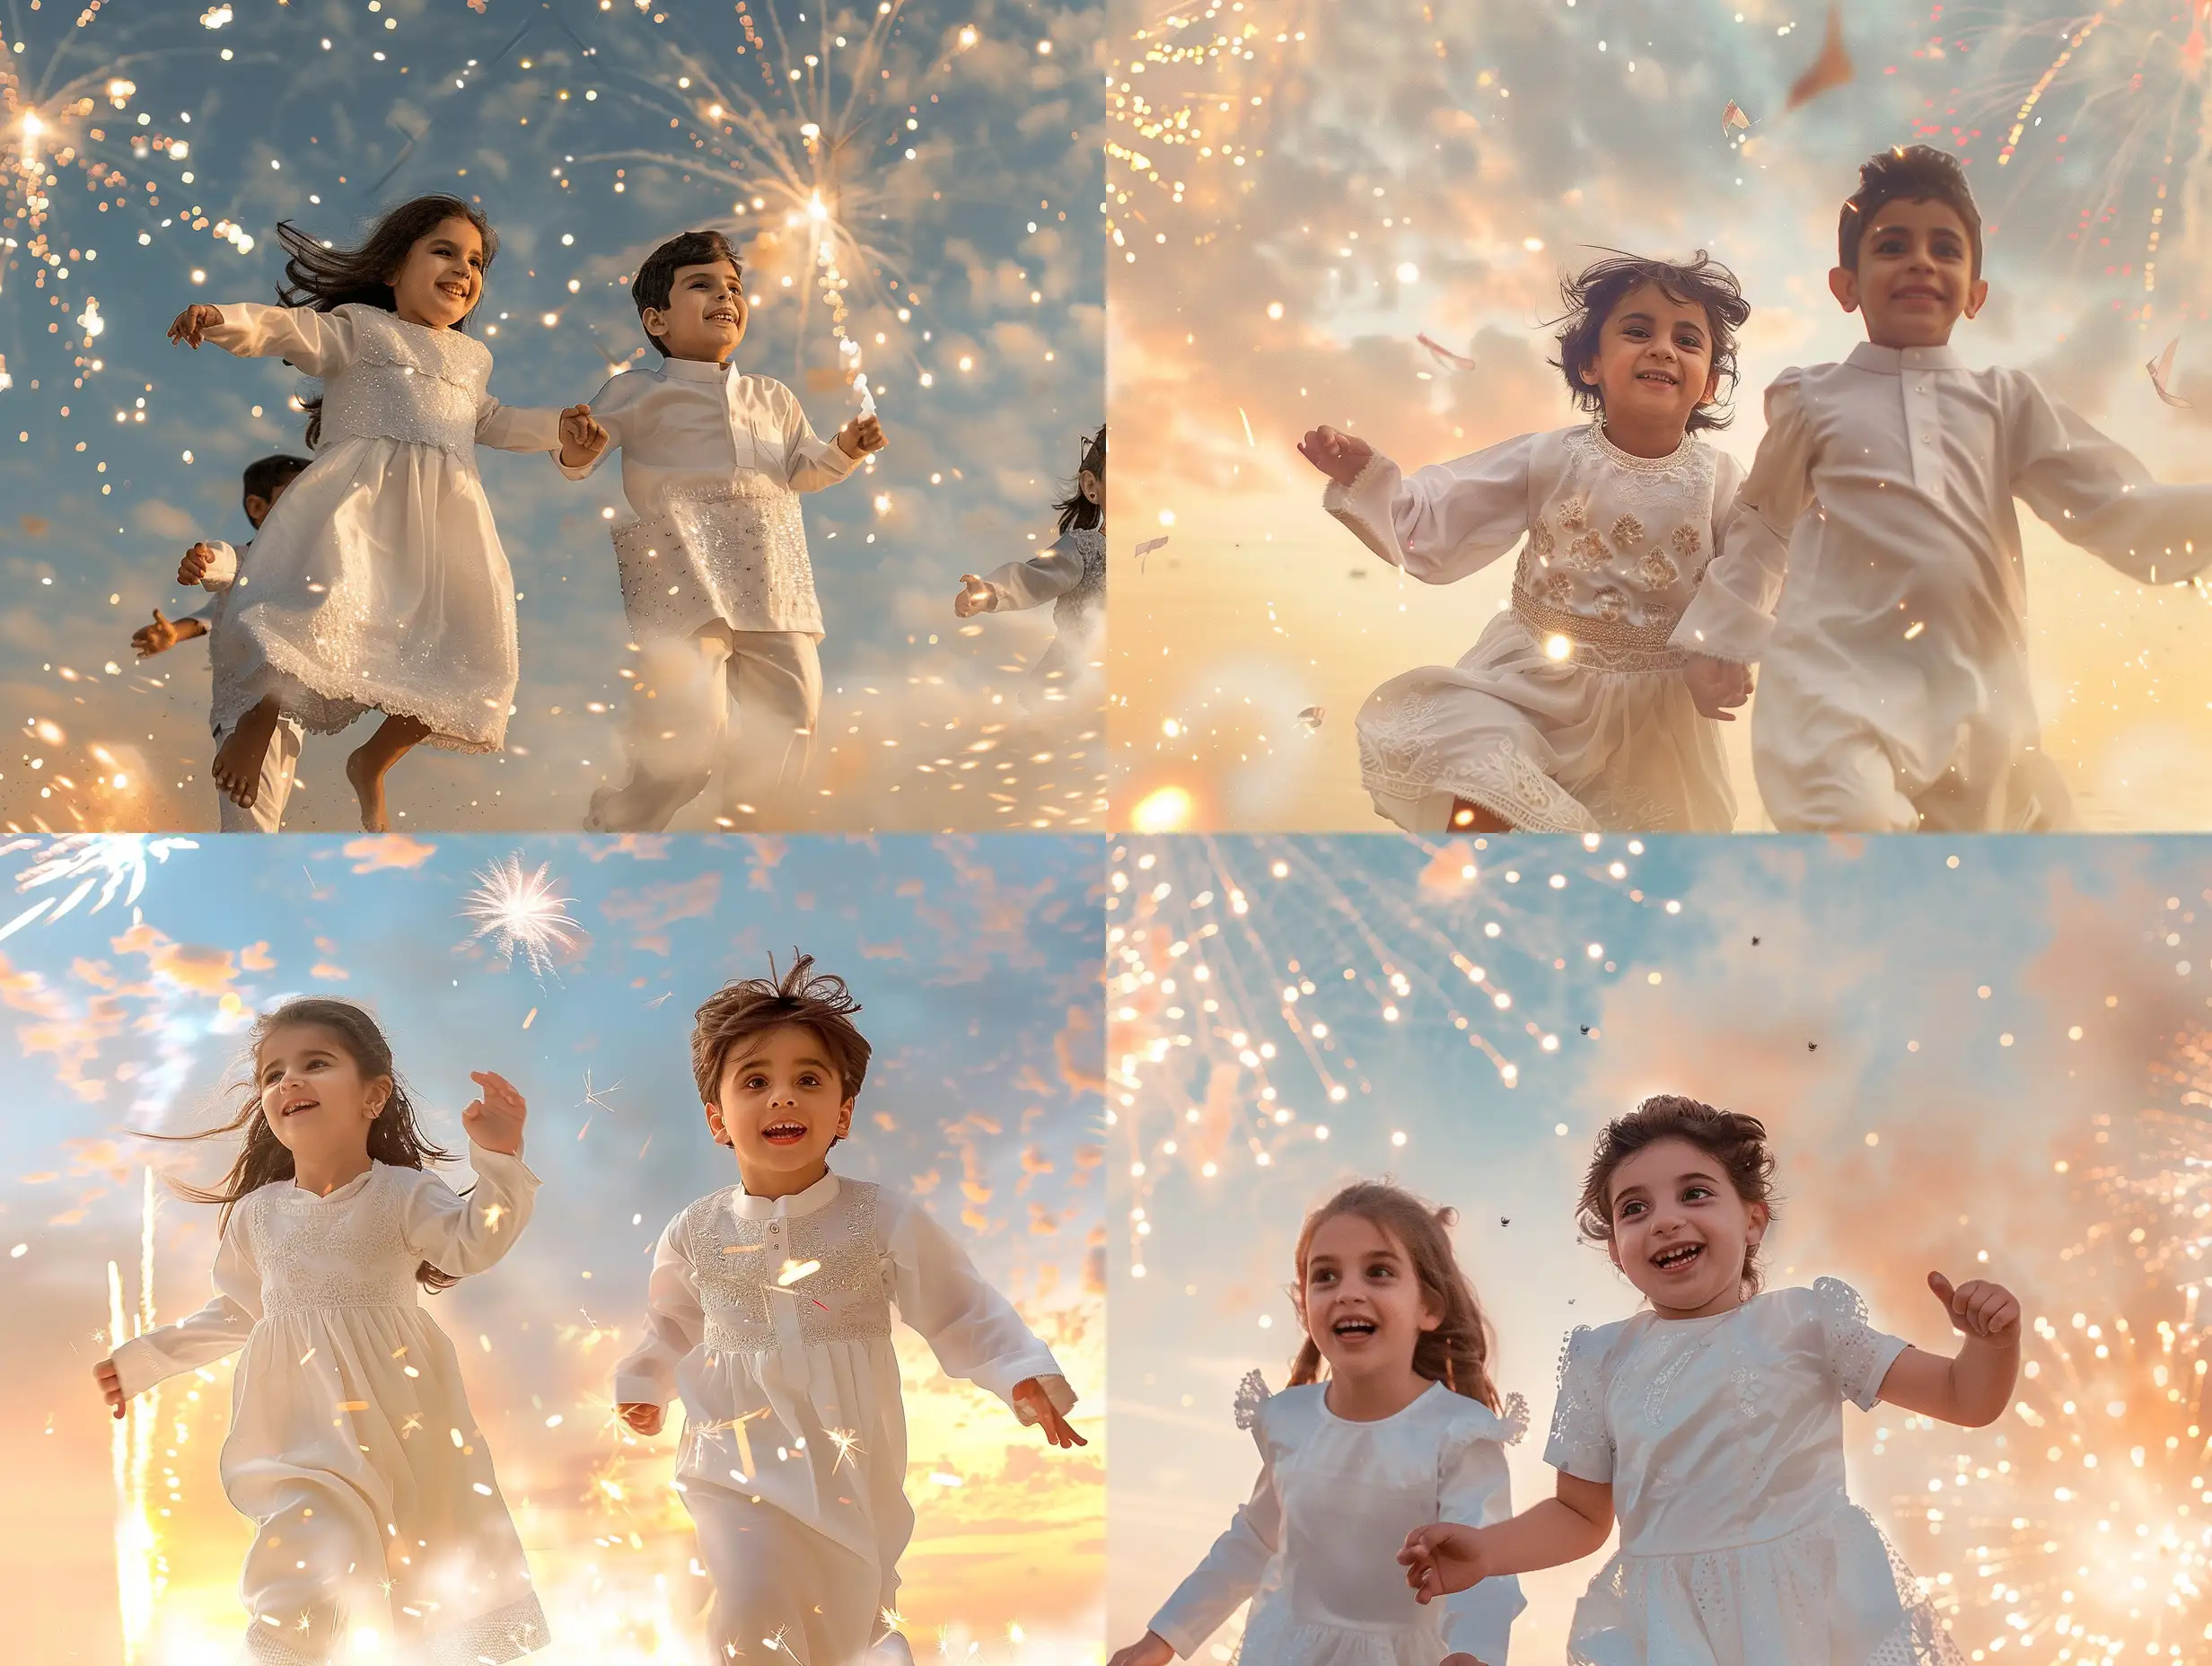 Joyful-Children-Celebrating-Eid-alFitr-with-Fireworks-in-the-Sky